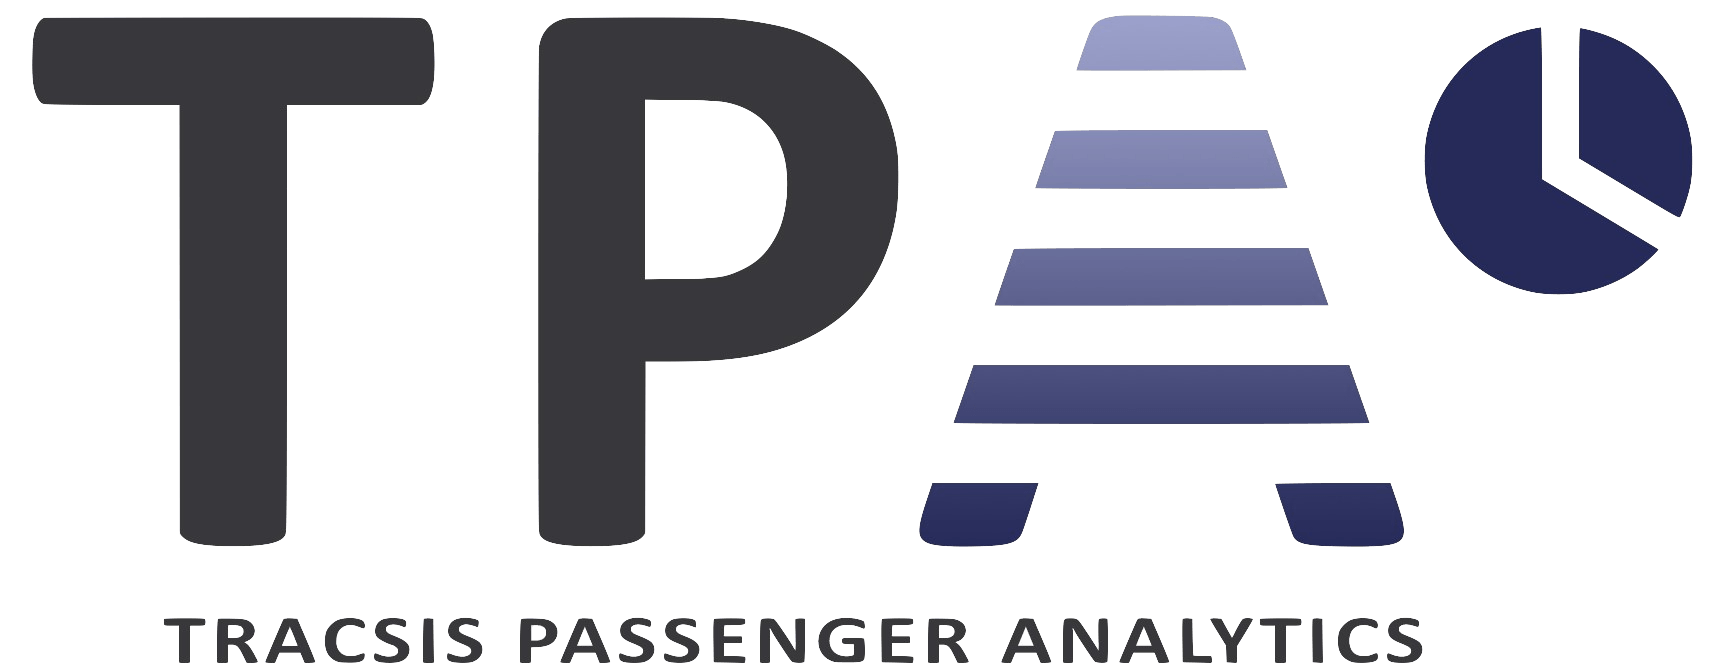 TPA Logo - TPA logo FINAL 2 - Tracsis Traffic and Data Services